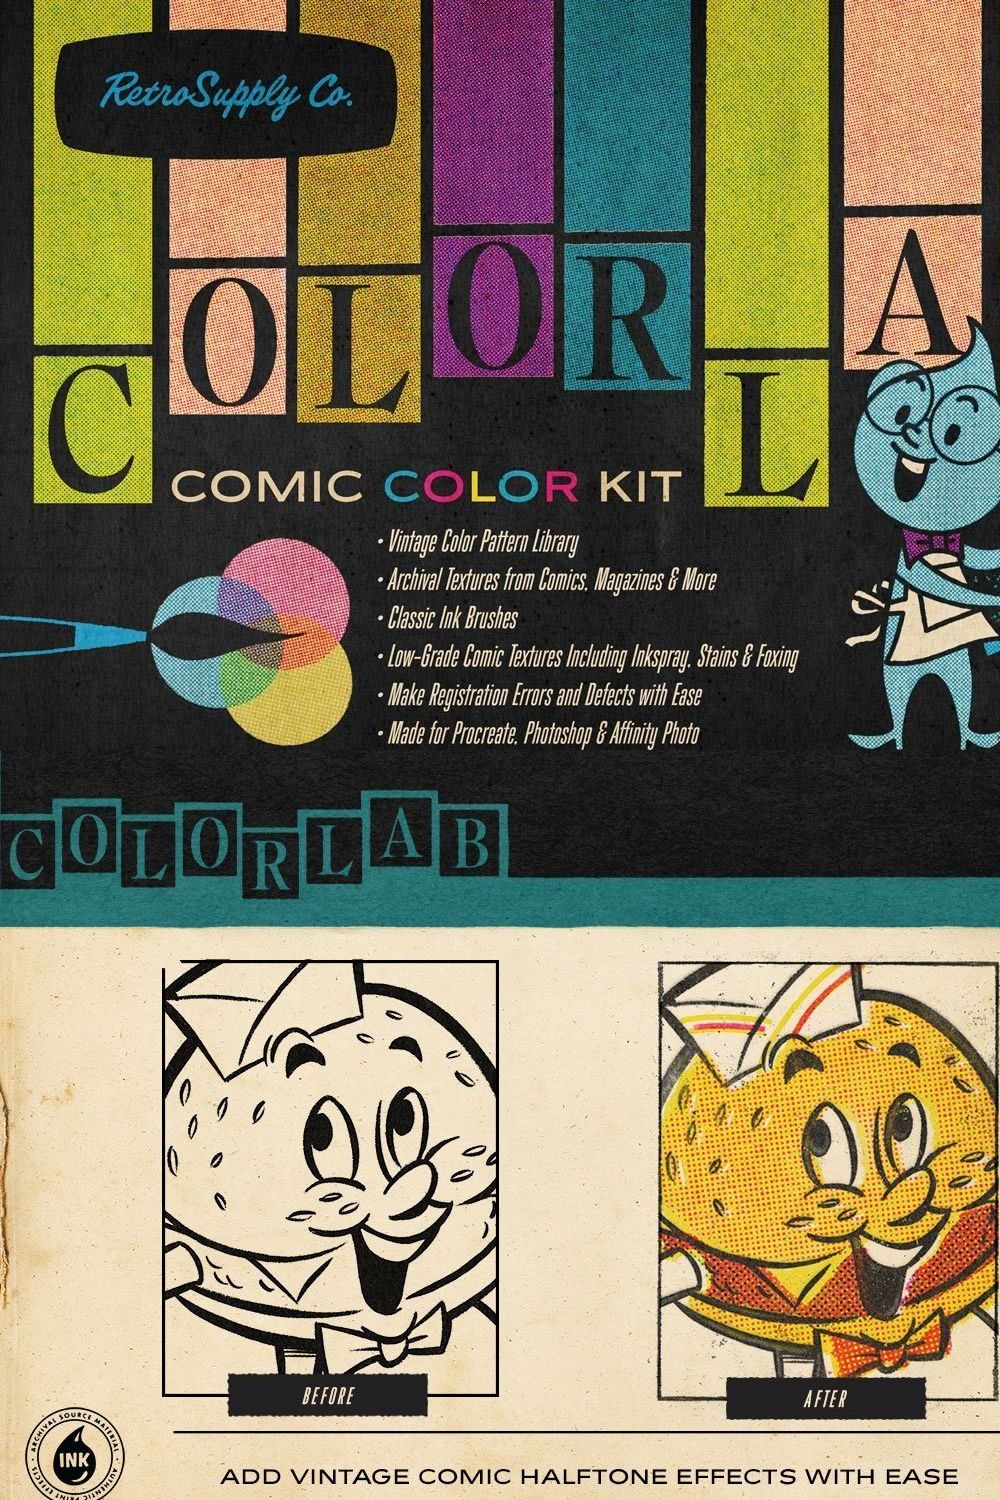 ColorLab Photoshop Vintage Comic Kit pinterest preview image.